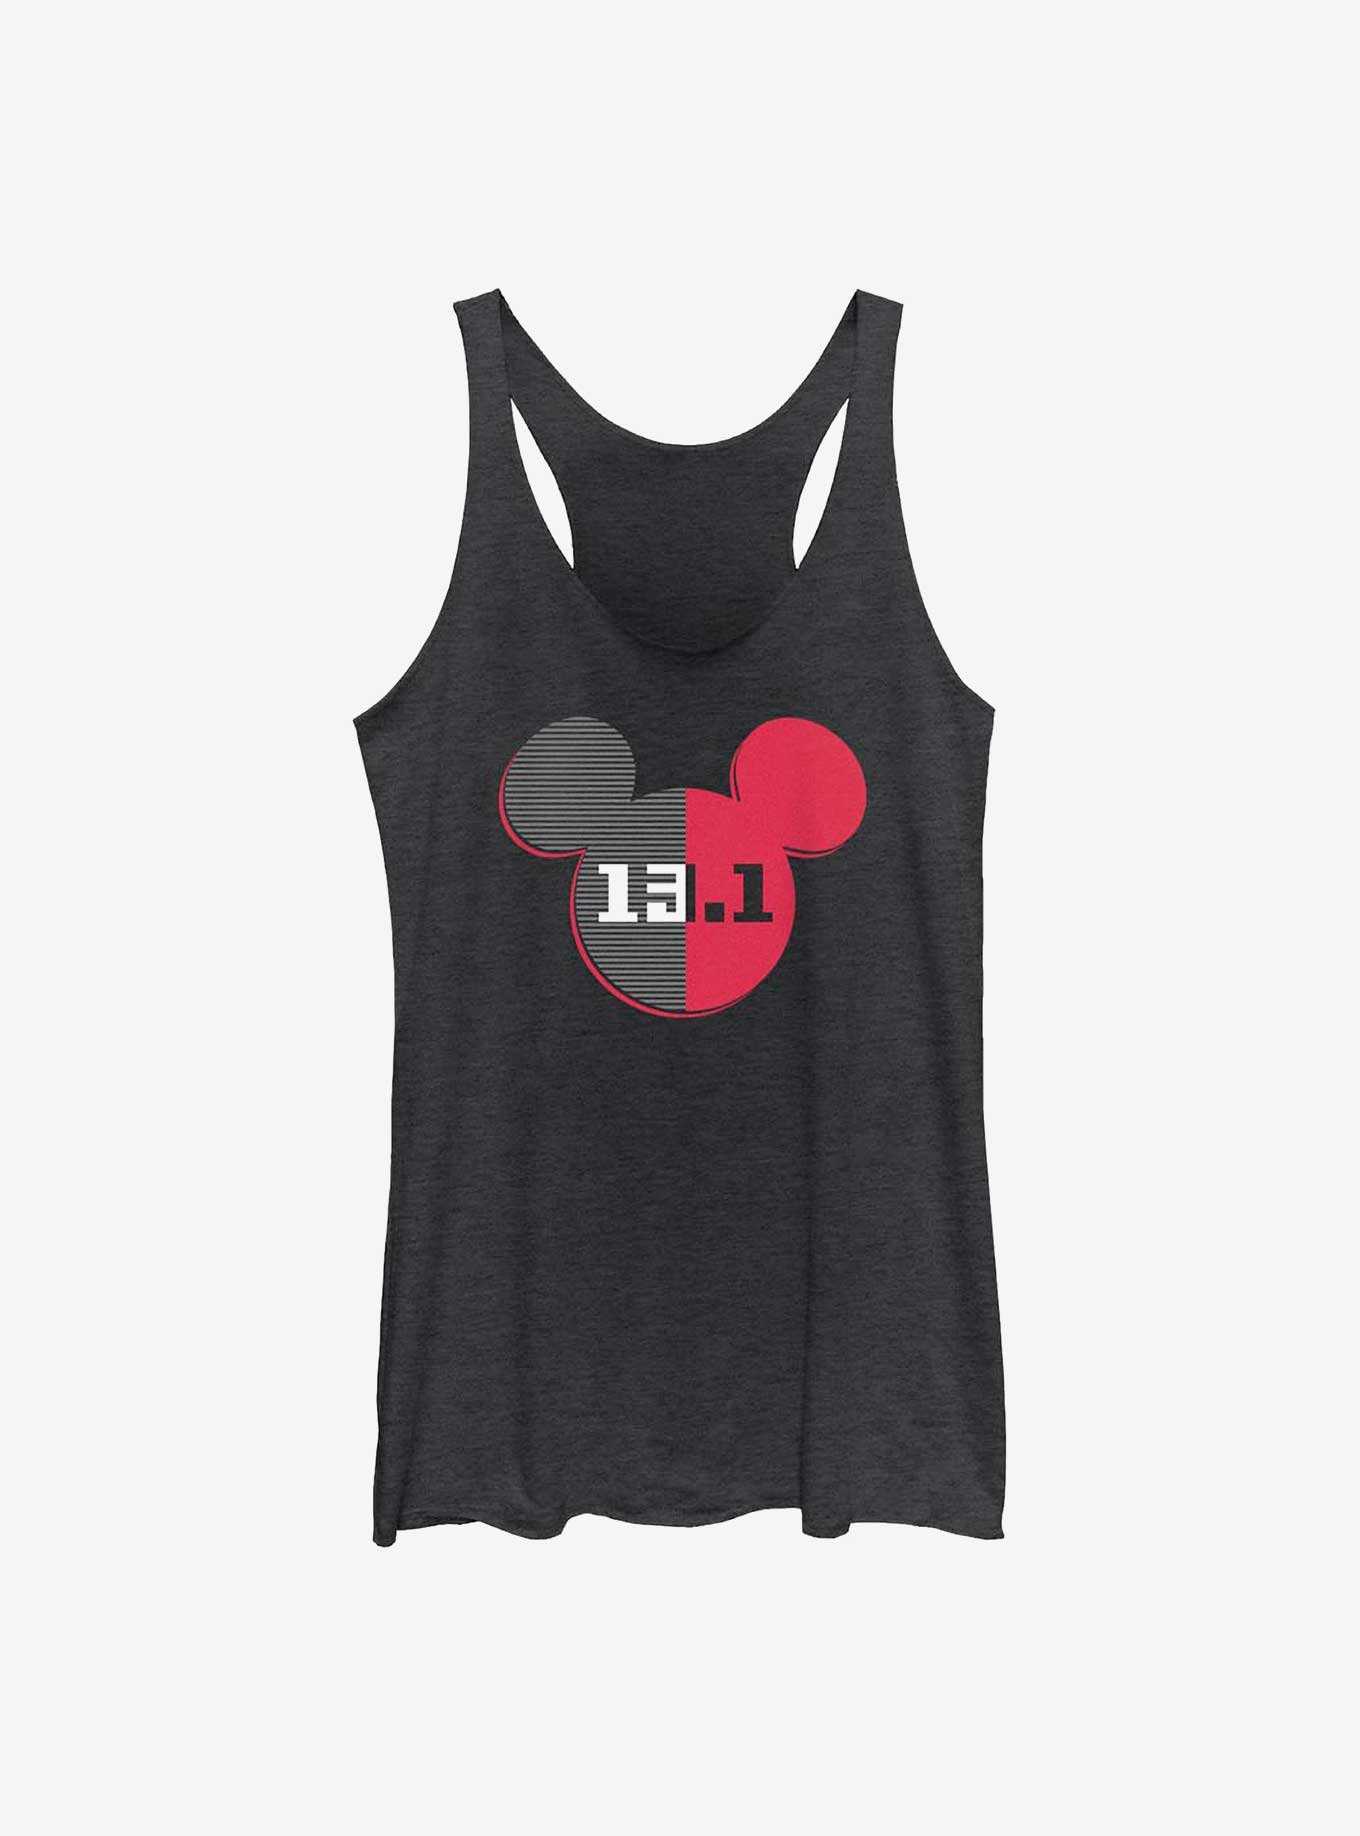 Disney Mickey Mouse 13.1 Half Marathon Ears Girls Tank, , hi-res